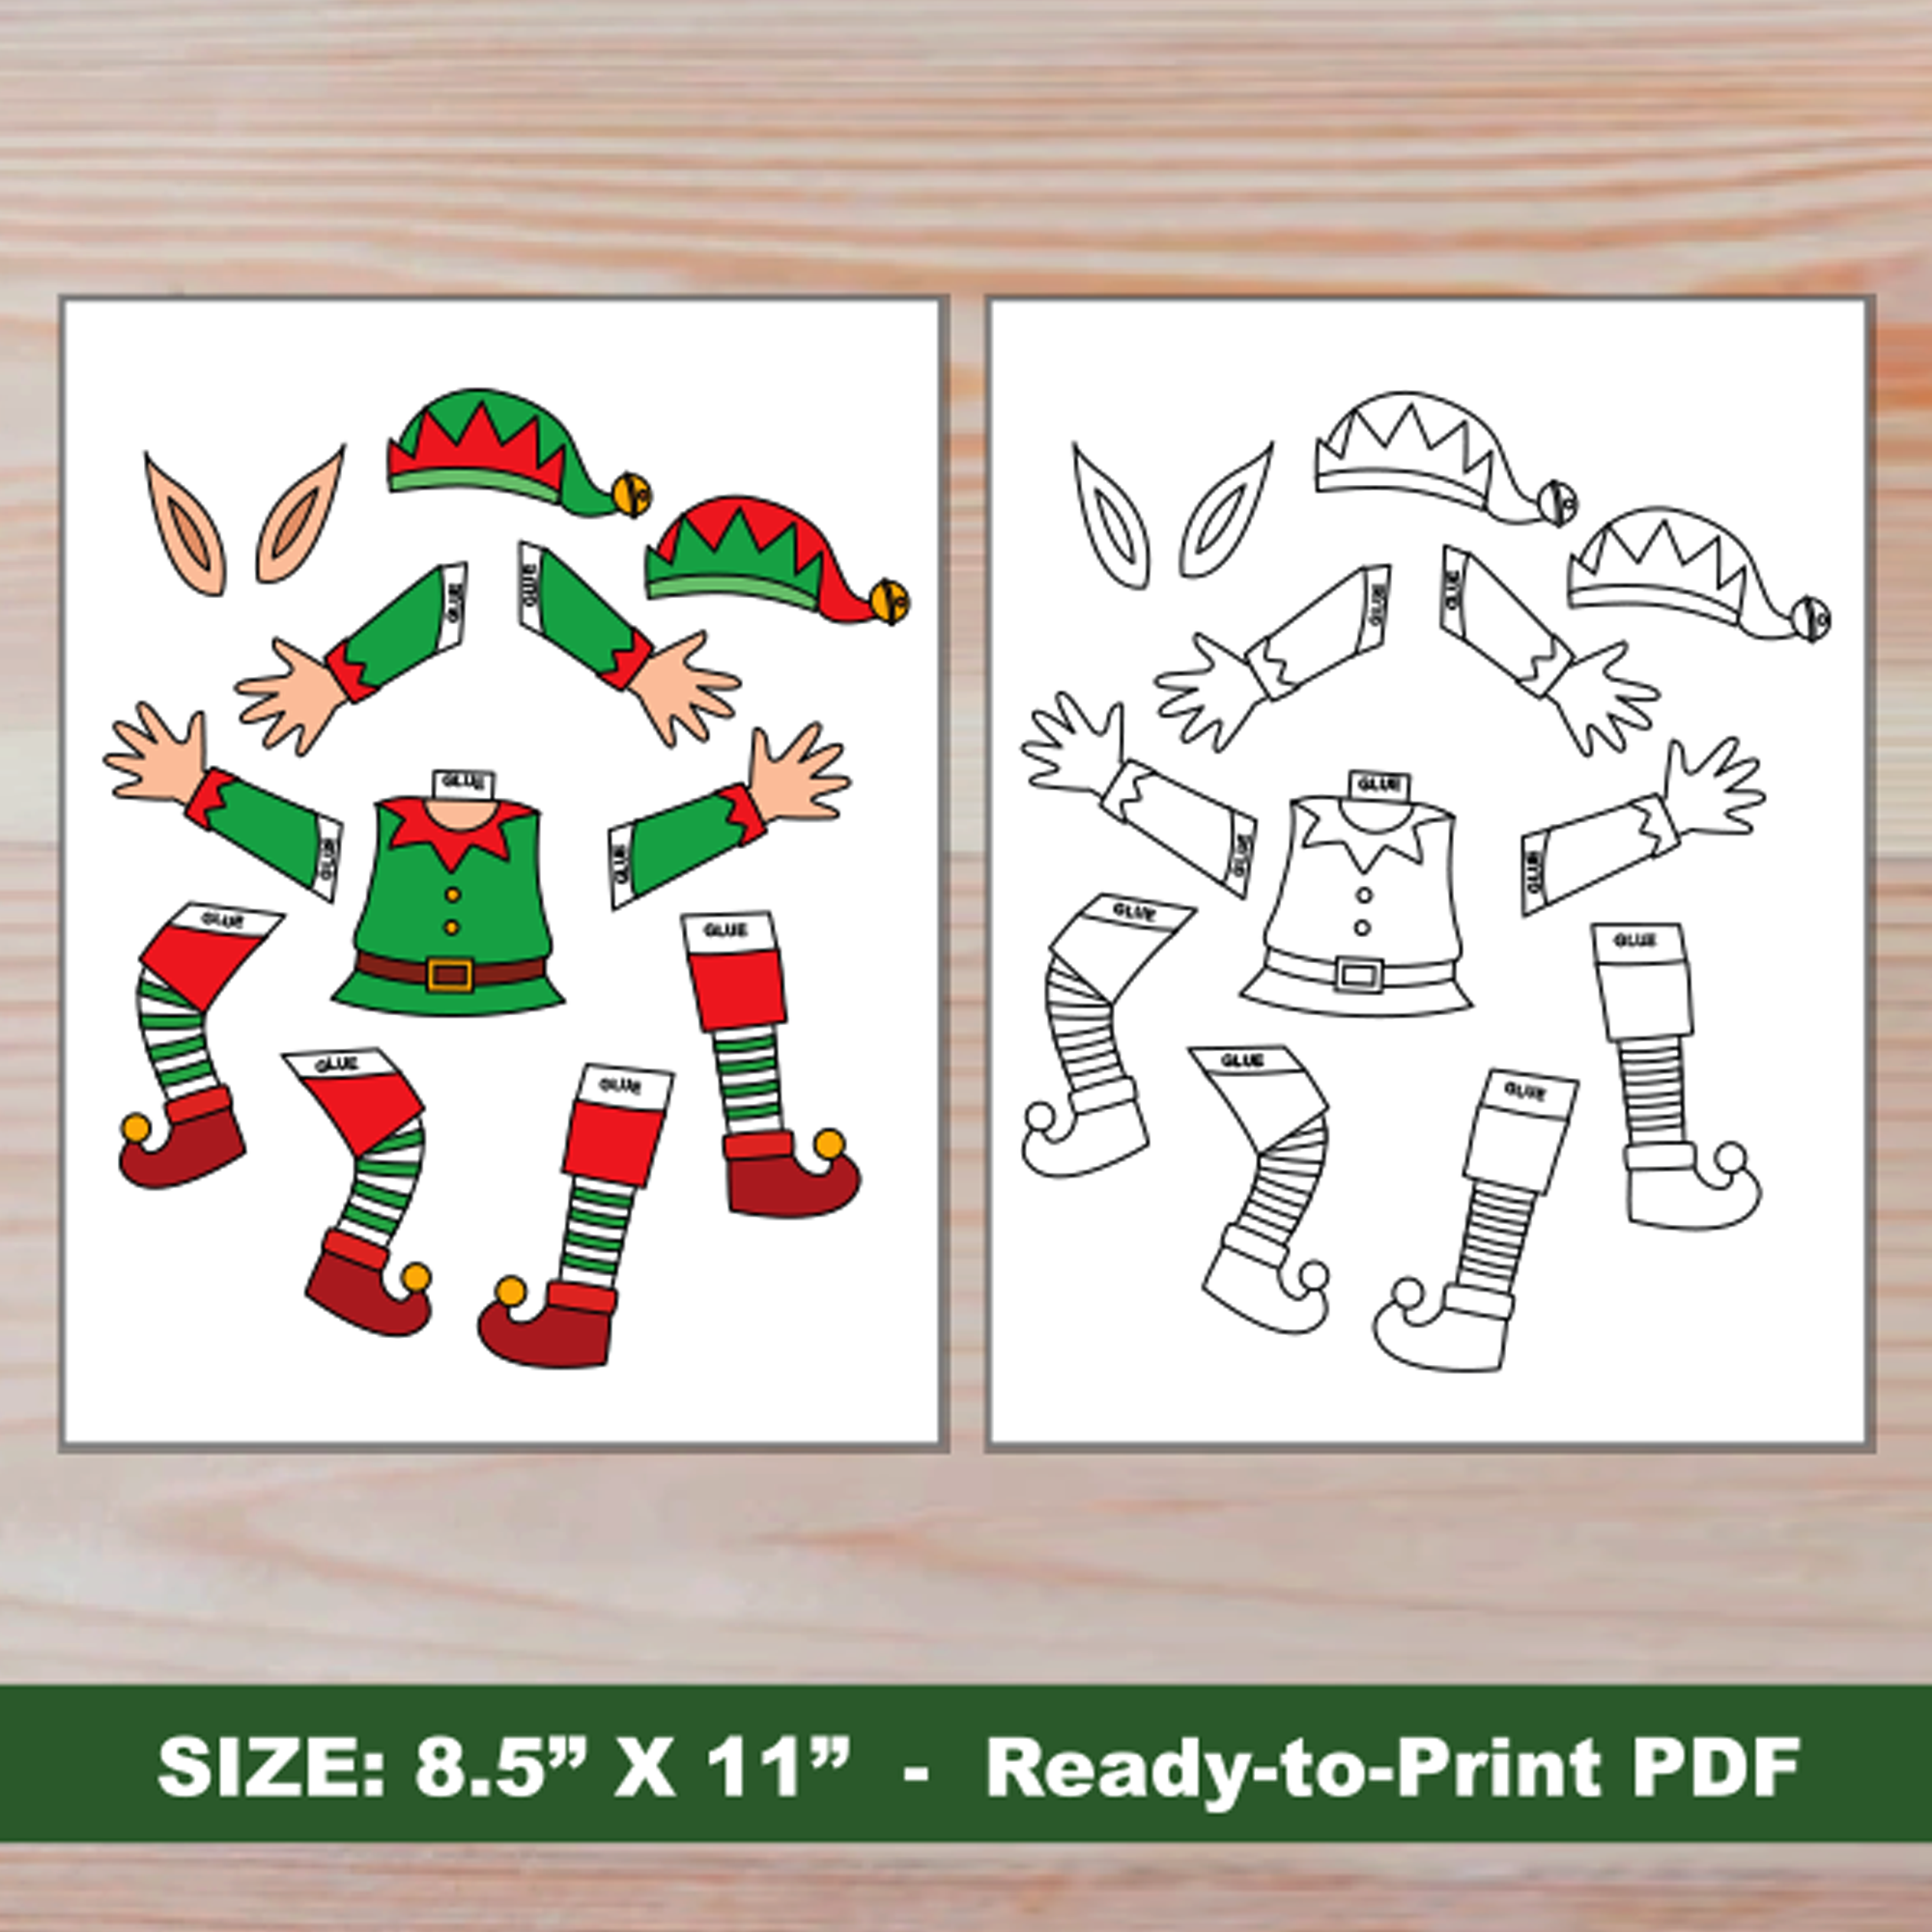 elf your self craft printable